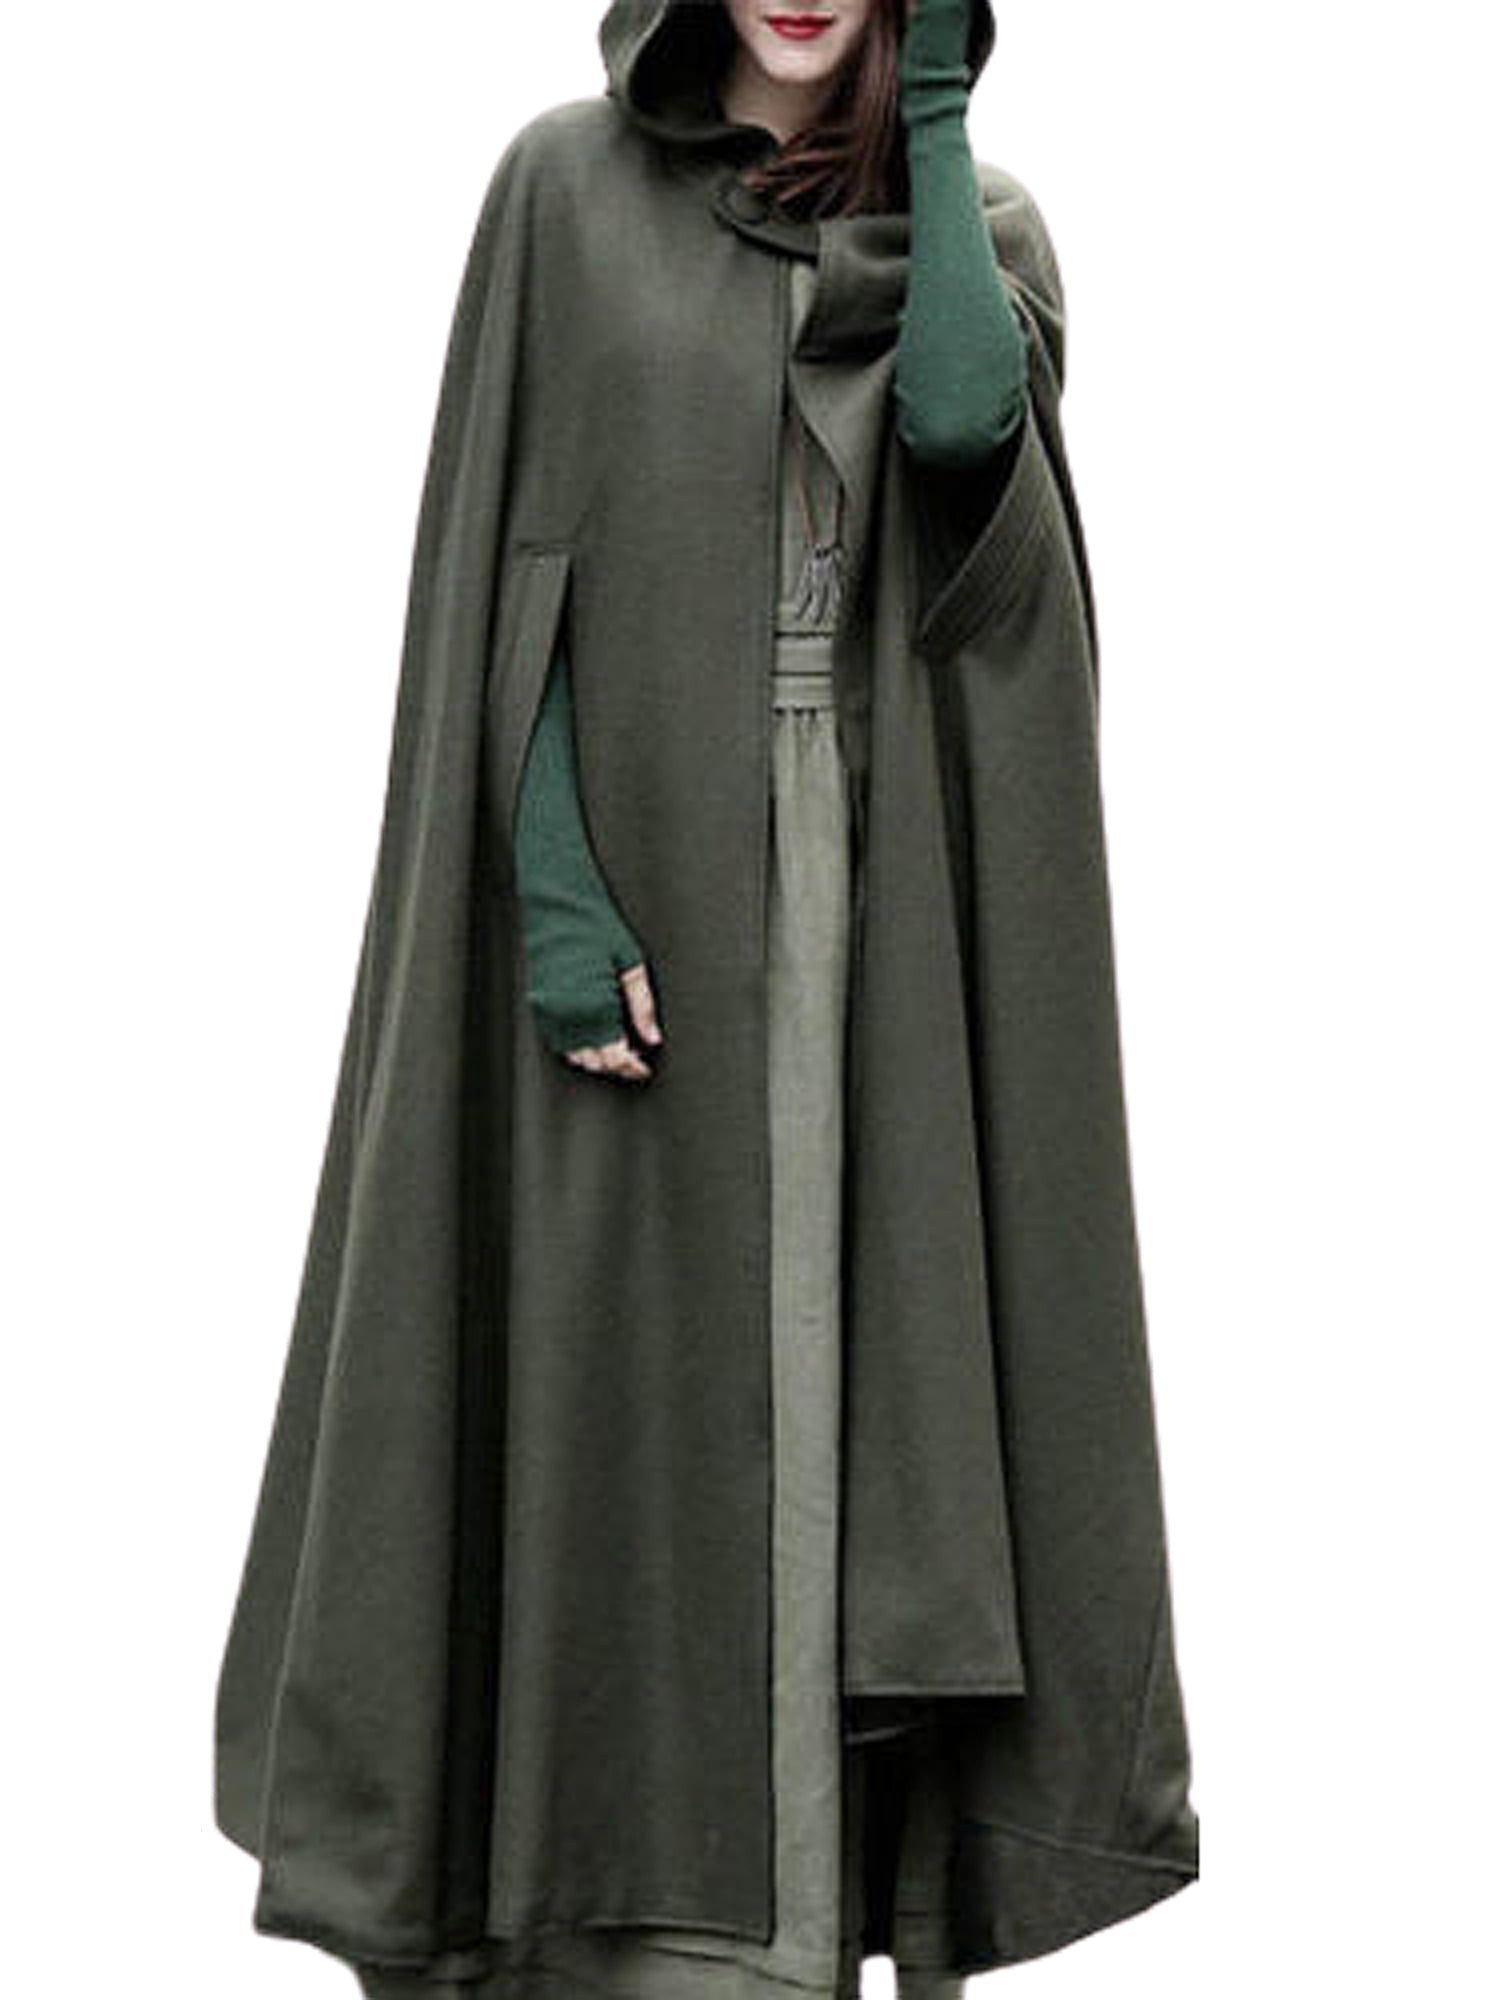 UK Womens Long Cape Cloak Cardigans Hooded Coat Outwear Medieval Robe Winter Top